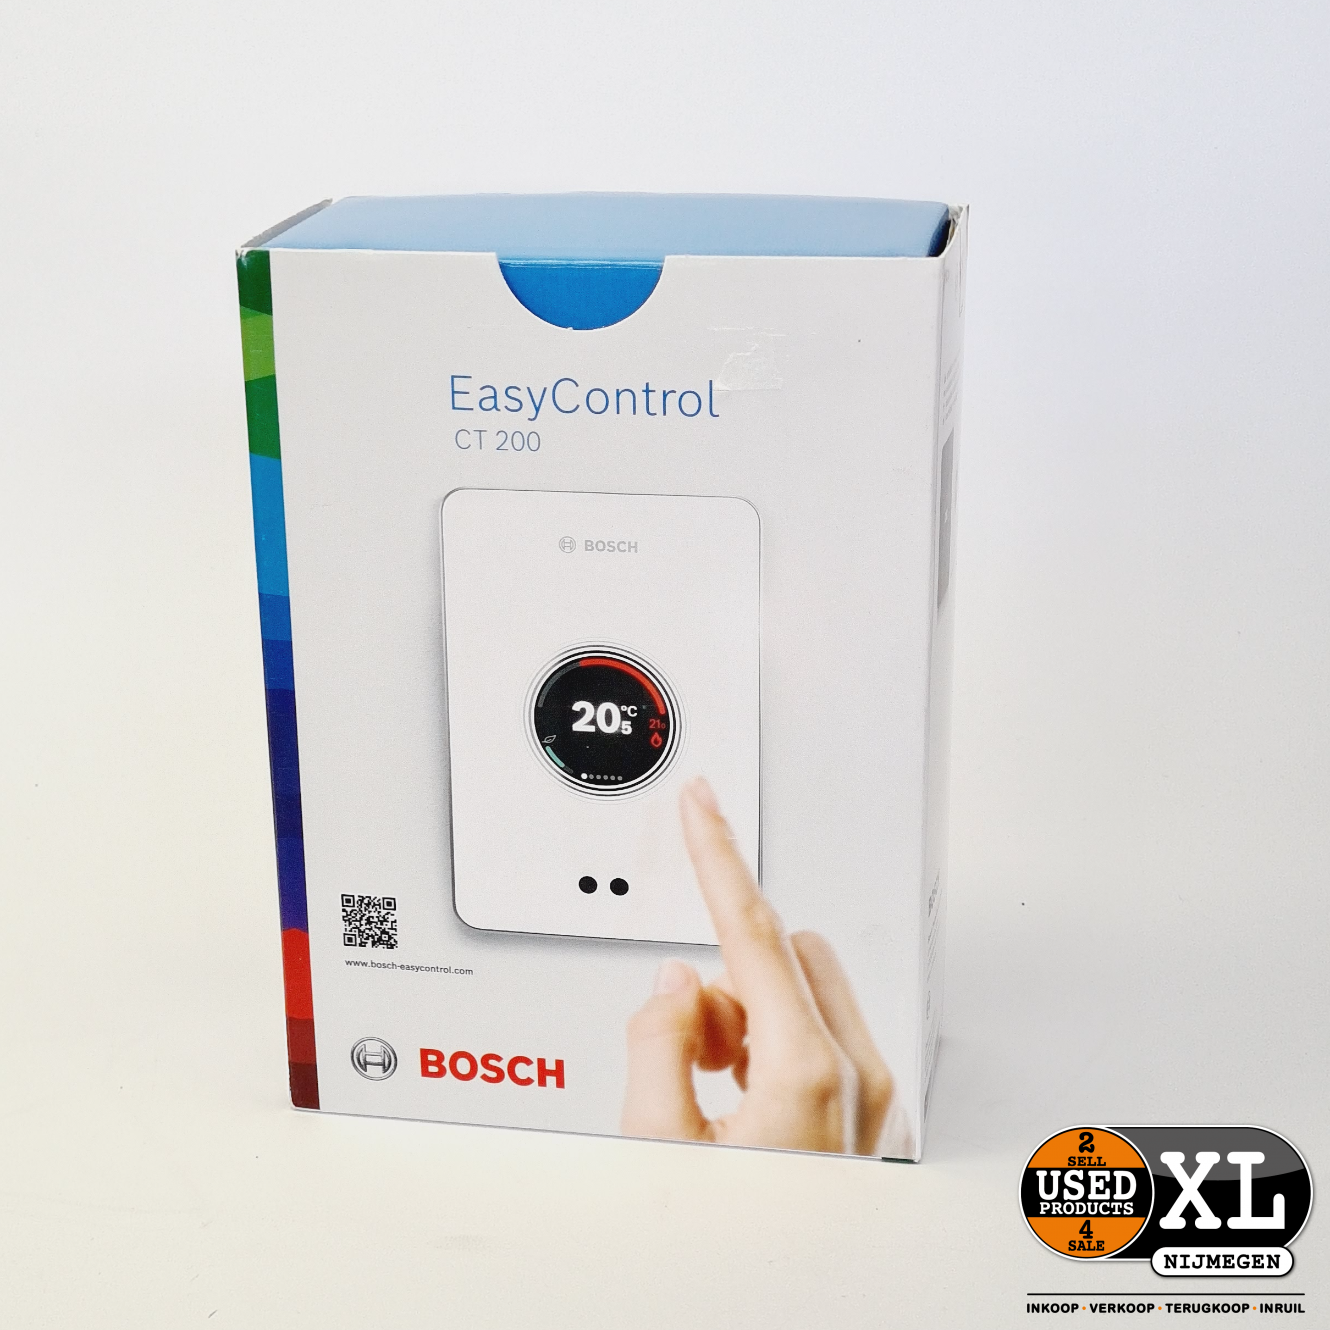 native Email schrijven prioriteit Bosch EasyControl CT 200 Slimme Thermostaat - Wit (bedraad) | Nette Staat -  Used Products Nijmegen XL